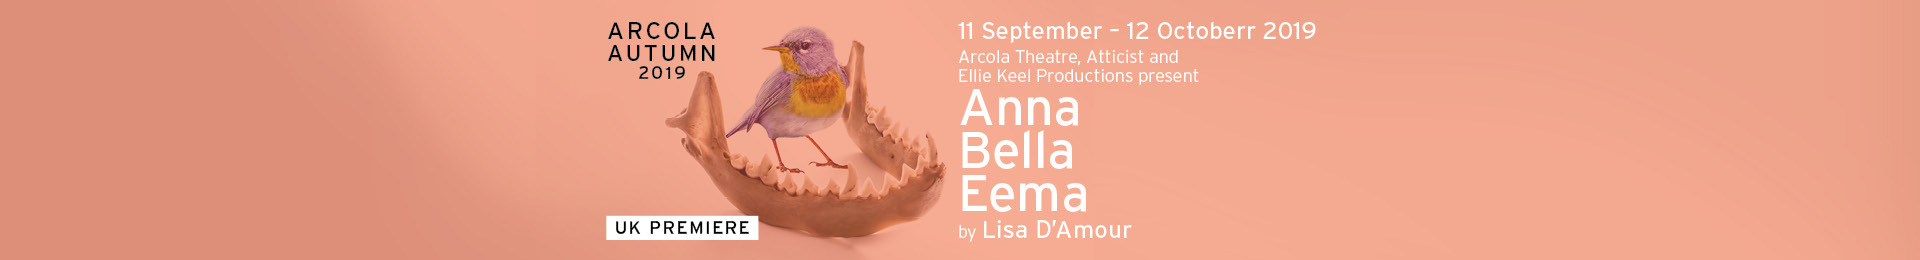 Anna Bella Eema banner image